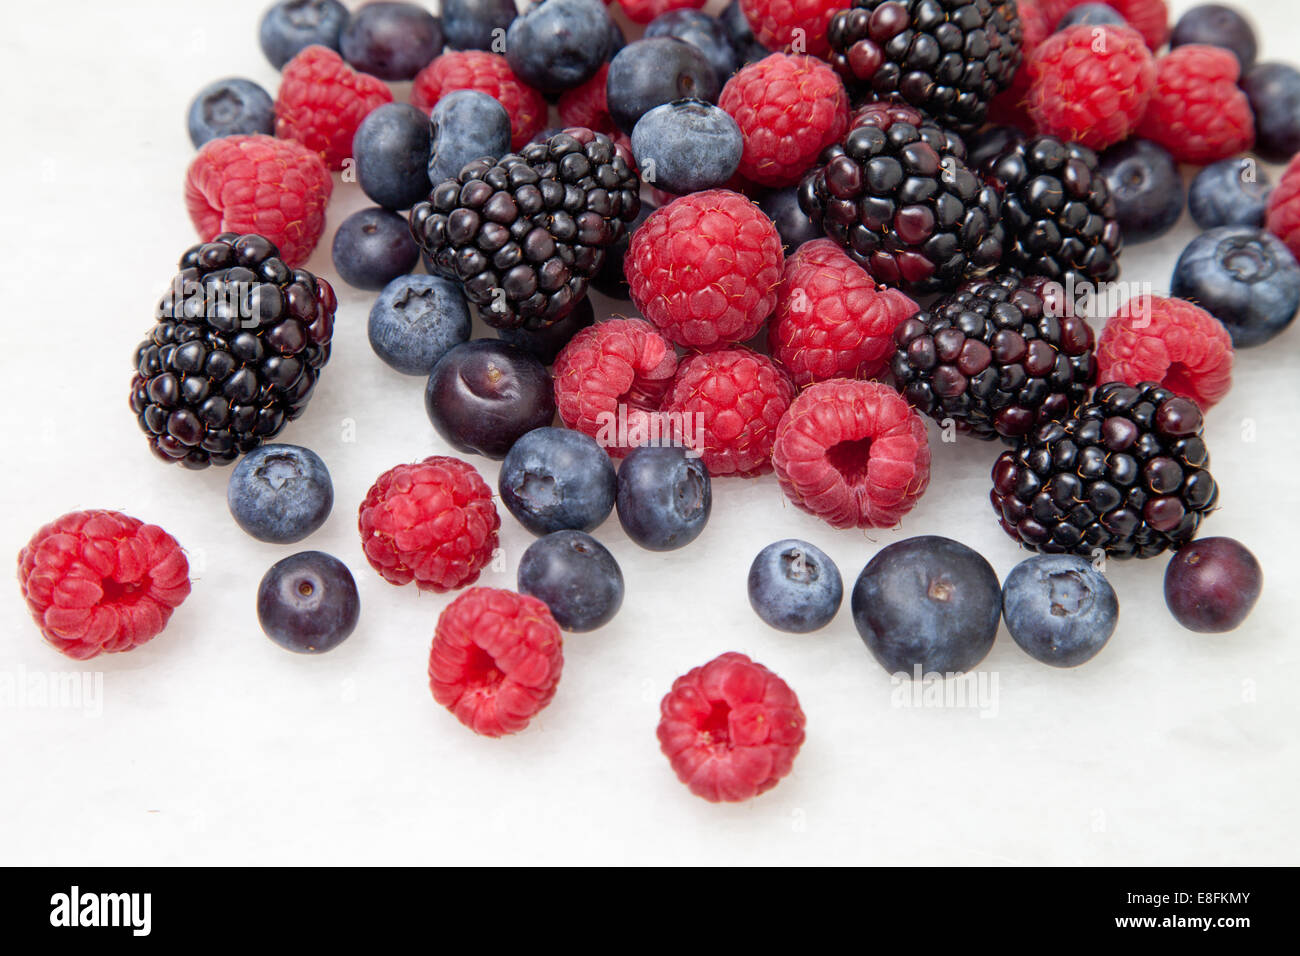 Blueberries, raspberries and blackberries Stock Photo